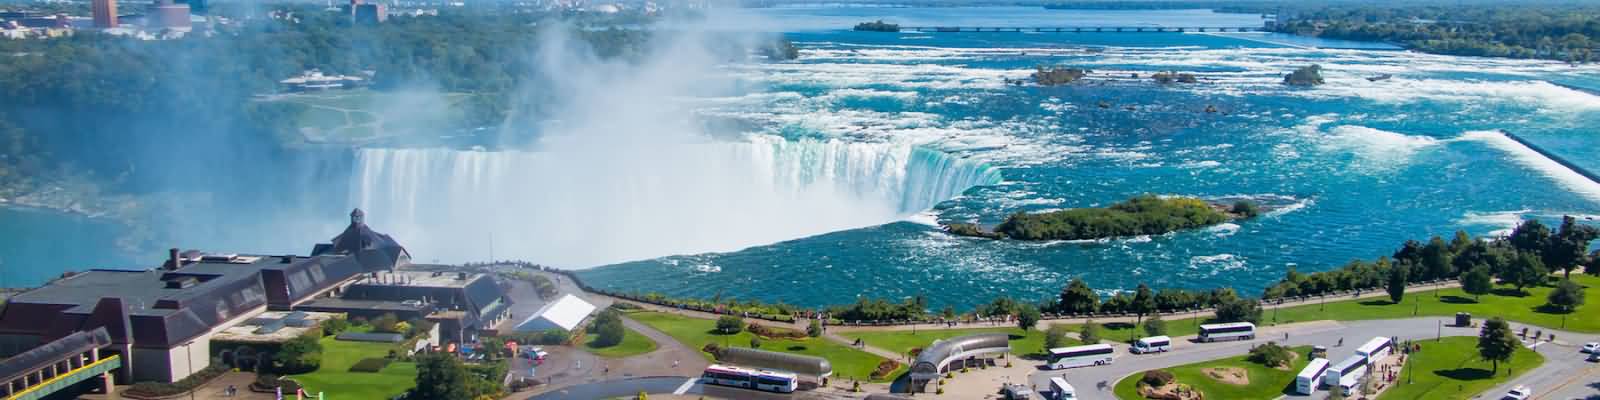 Panorama View Of Niagara Falls